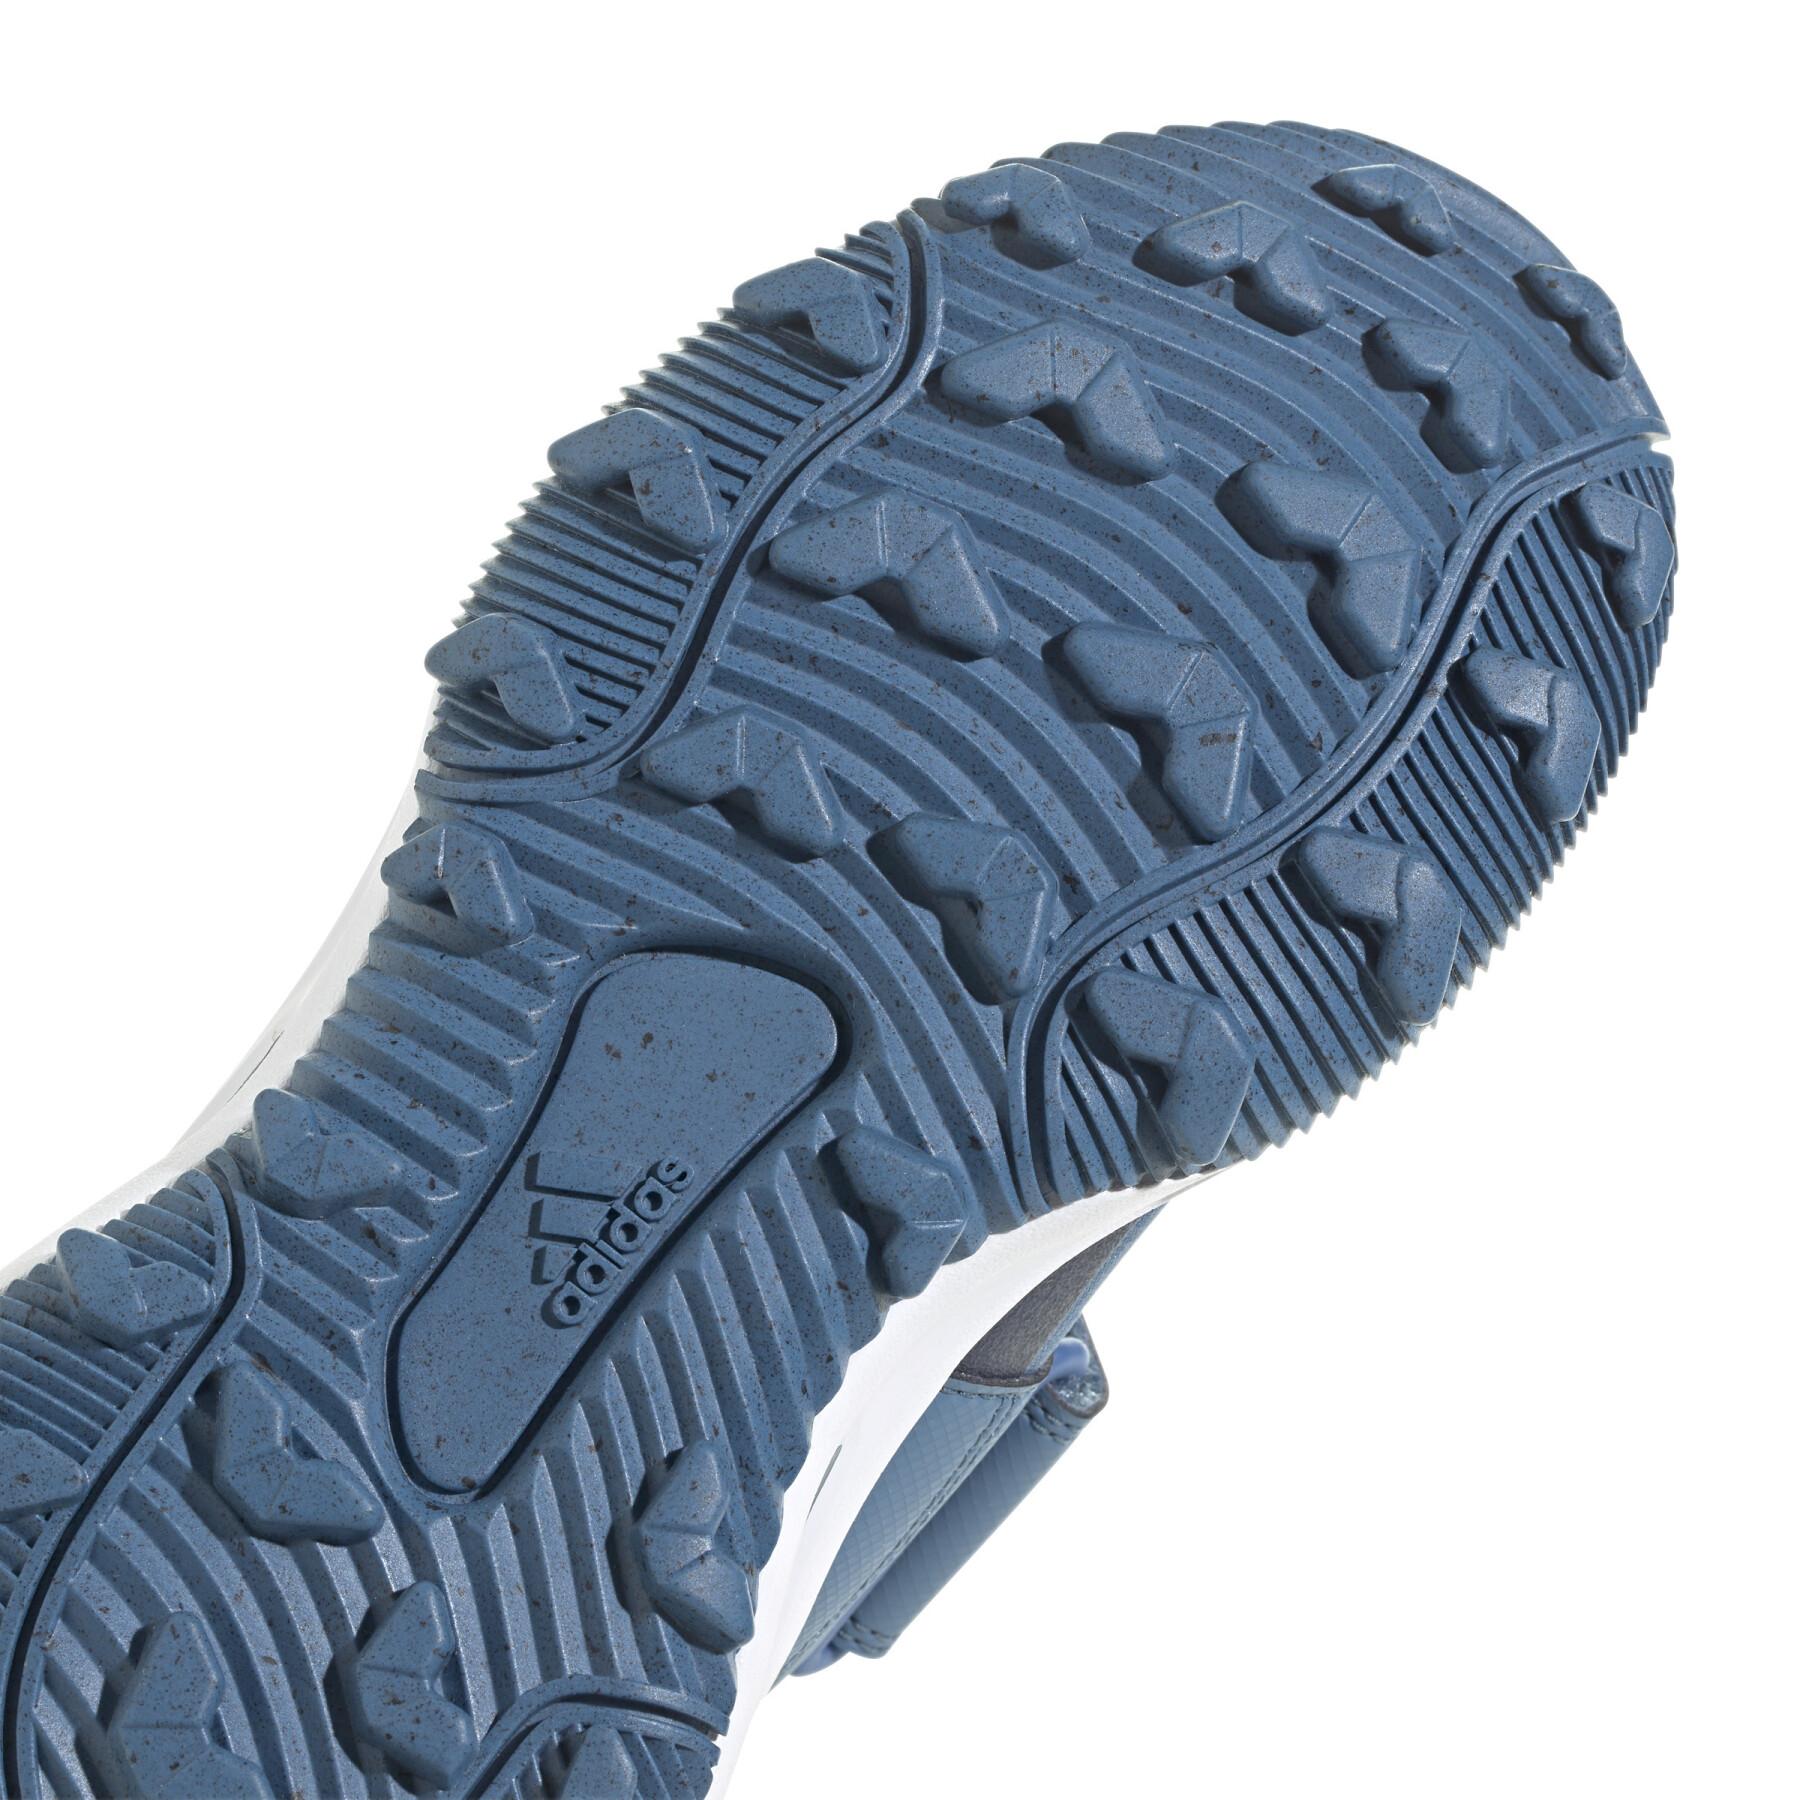 Chaussures de running enfant adidas FortaRun All-Terrain